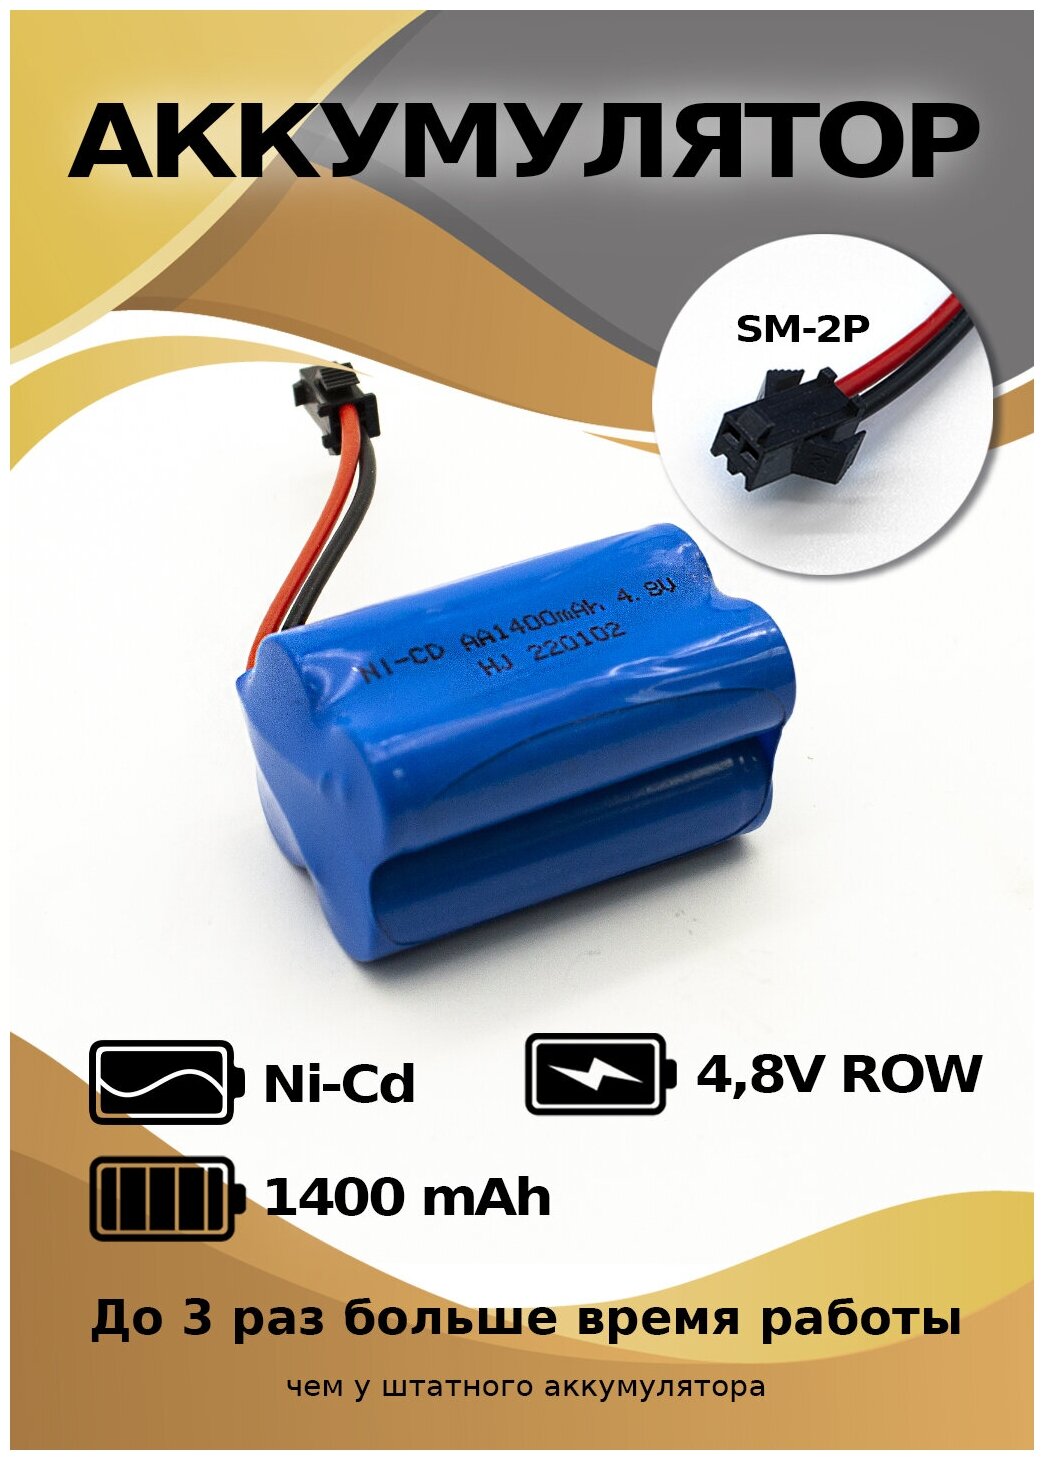 Аккумулятор Ni-Cd AA 4.8 v 1400 mah форма Row разъем YP для детской машинки на пульте